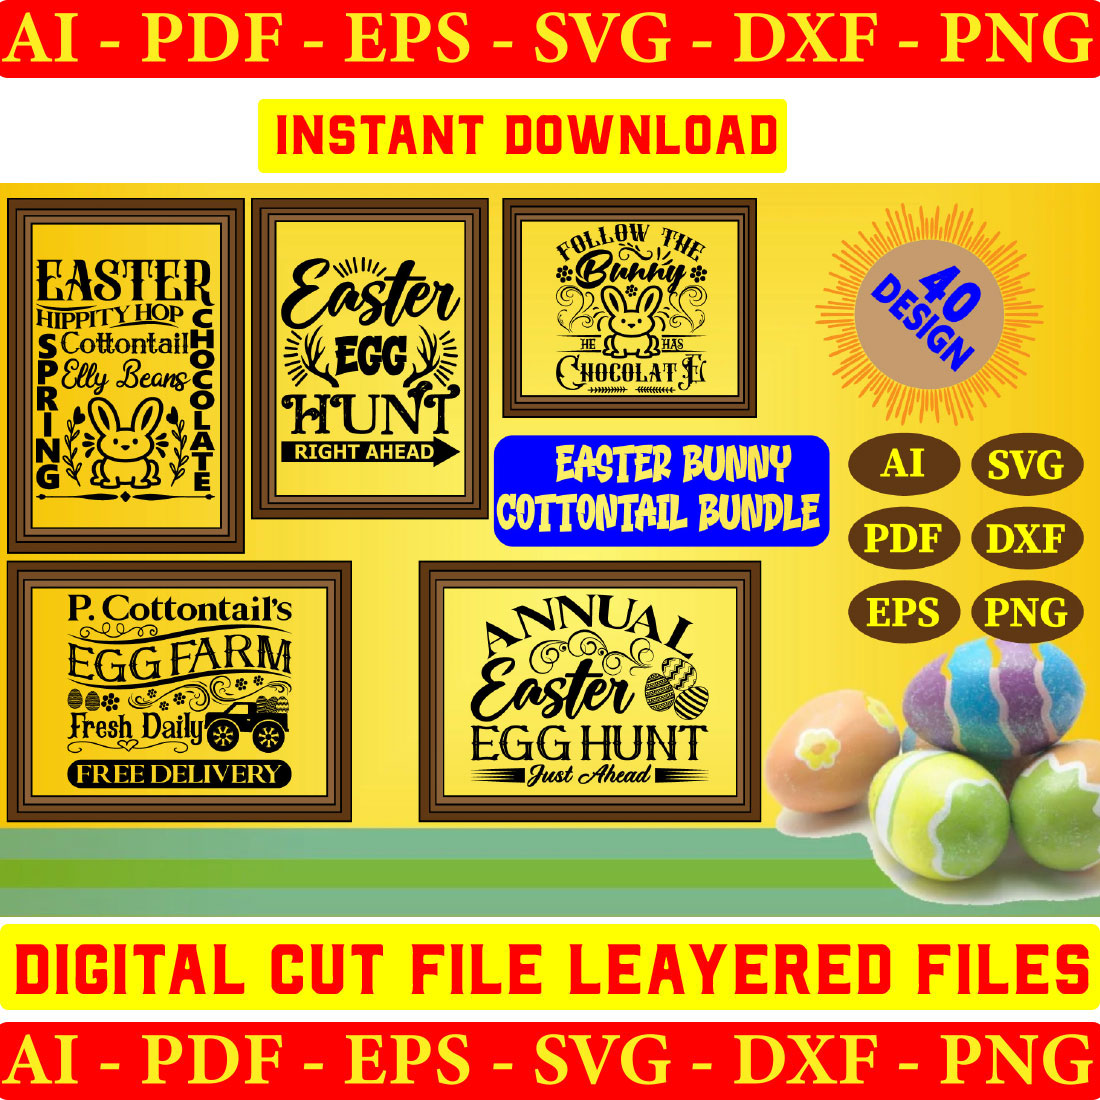 Easter Bunny Cottontail Bundle SVG 40 Designs Vol-06 cover image.